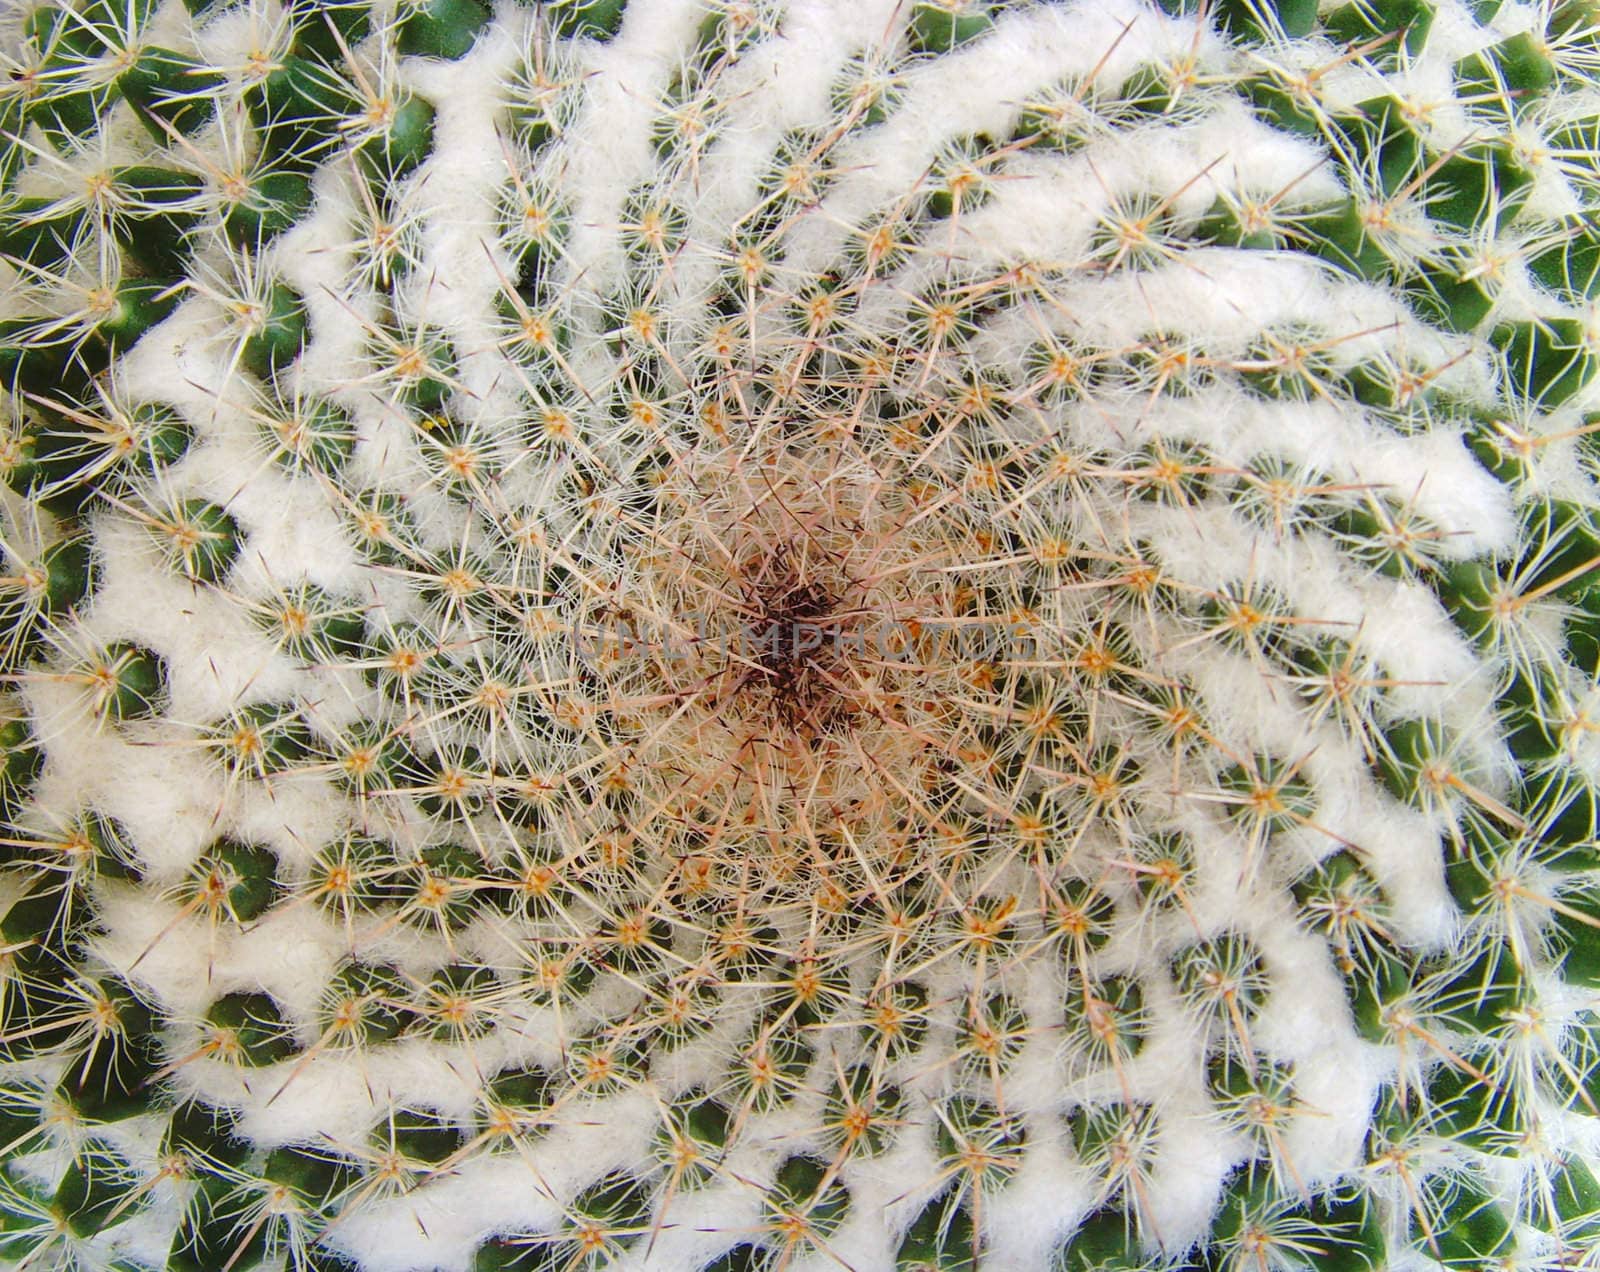 a close-up of a top of a cactus